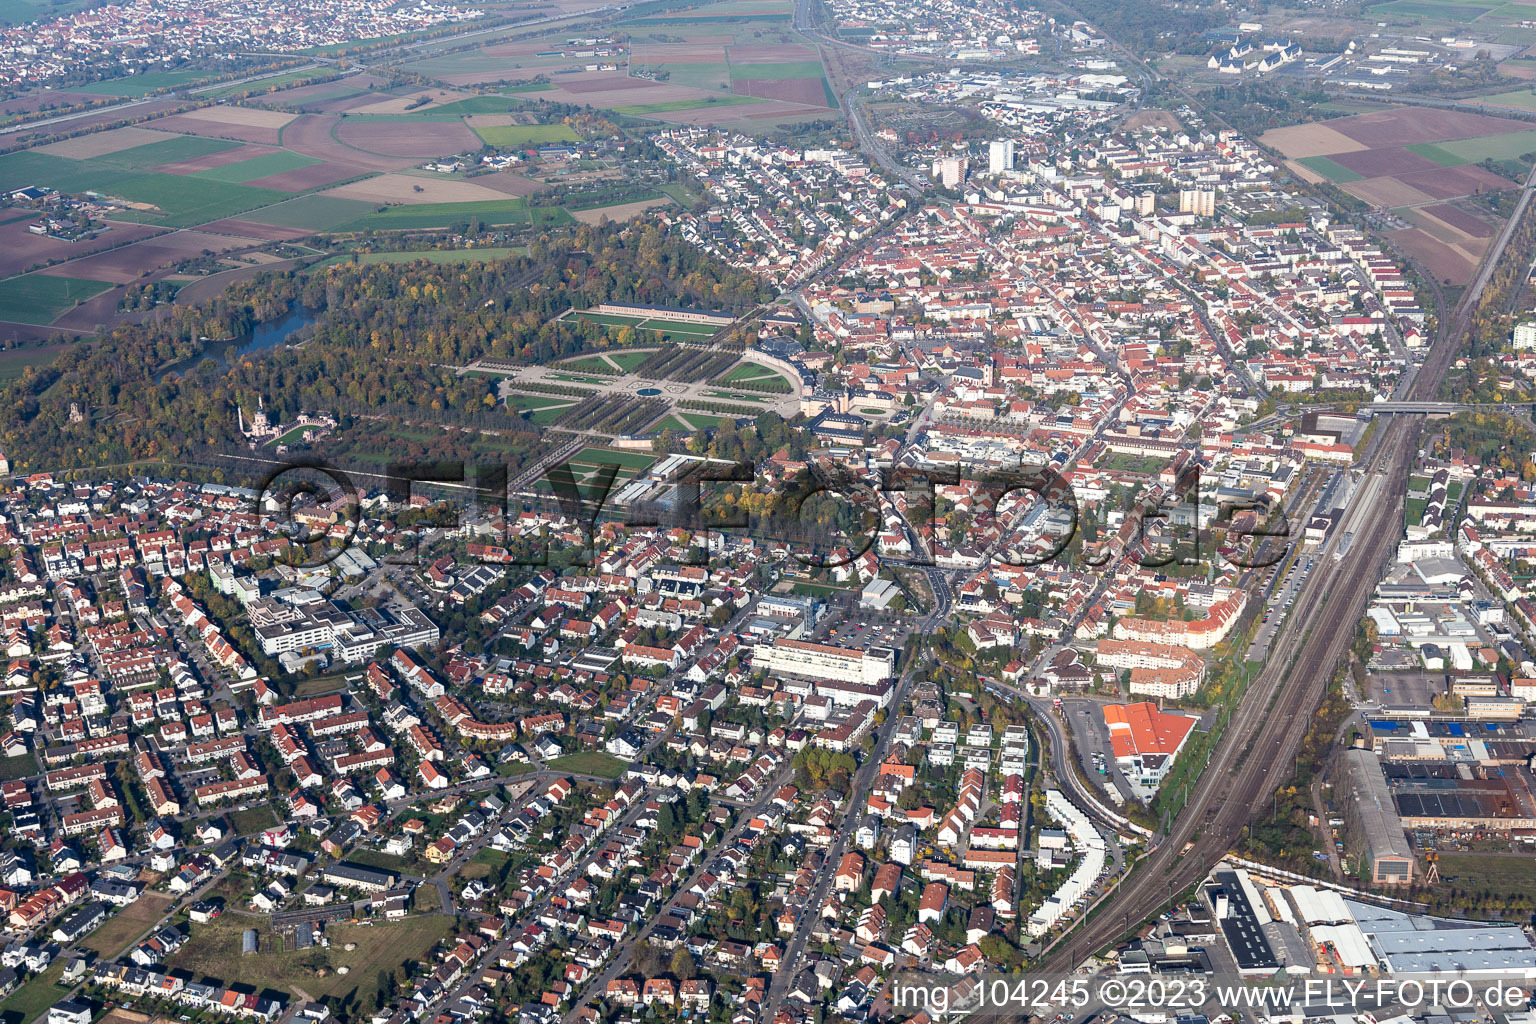 Drone recording of Schwetzingen in the state Baden-Wuerttemberg, Germany